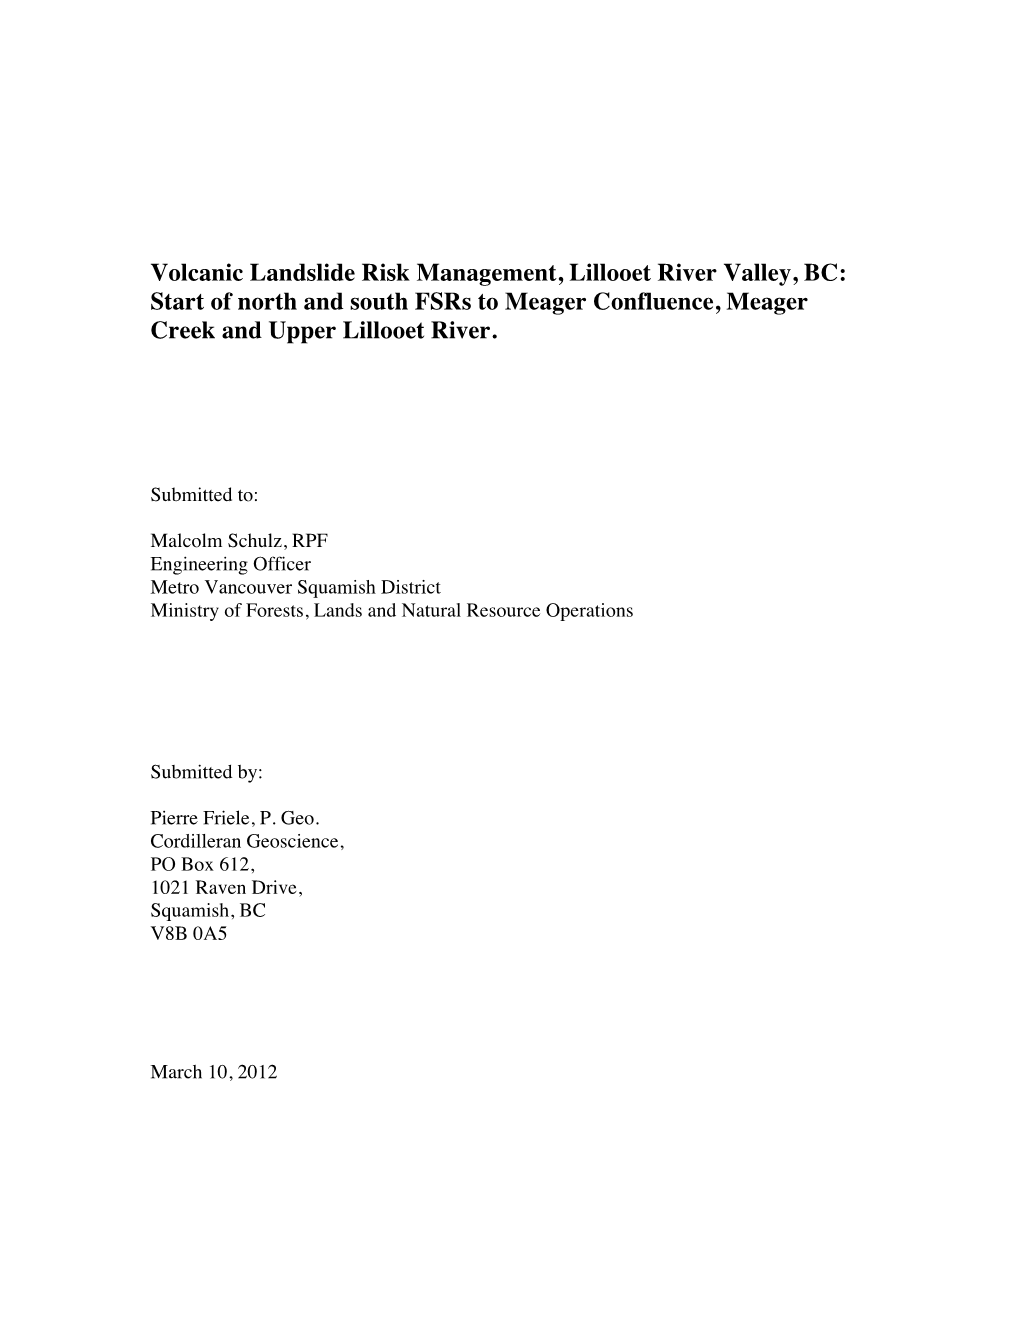 Volcanic Landslide Risk Management, Lillooet River Valley, BC: Start of North and South Fsrs to Meager Confluence, Meager Creek and Upper Lillooet River